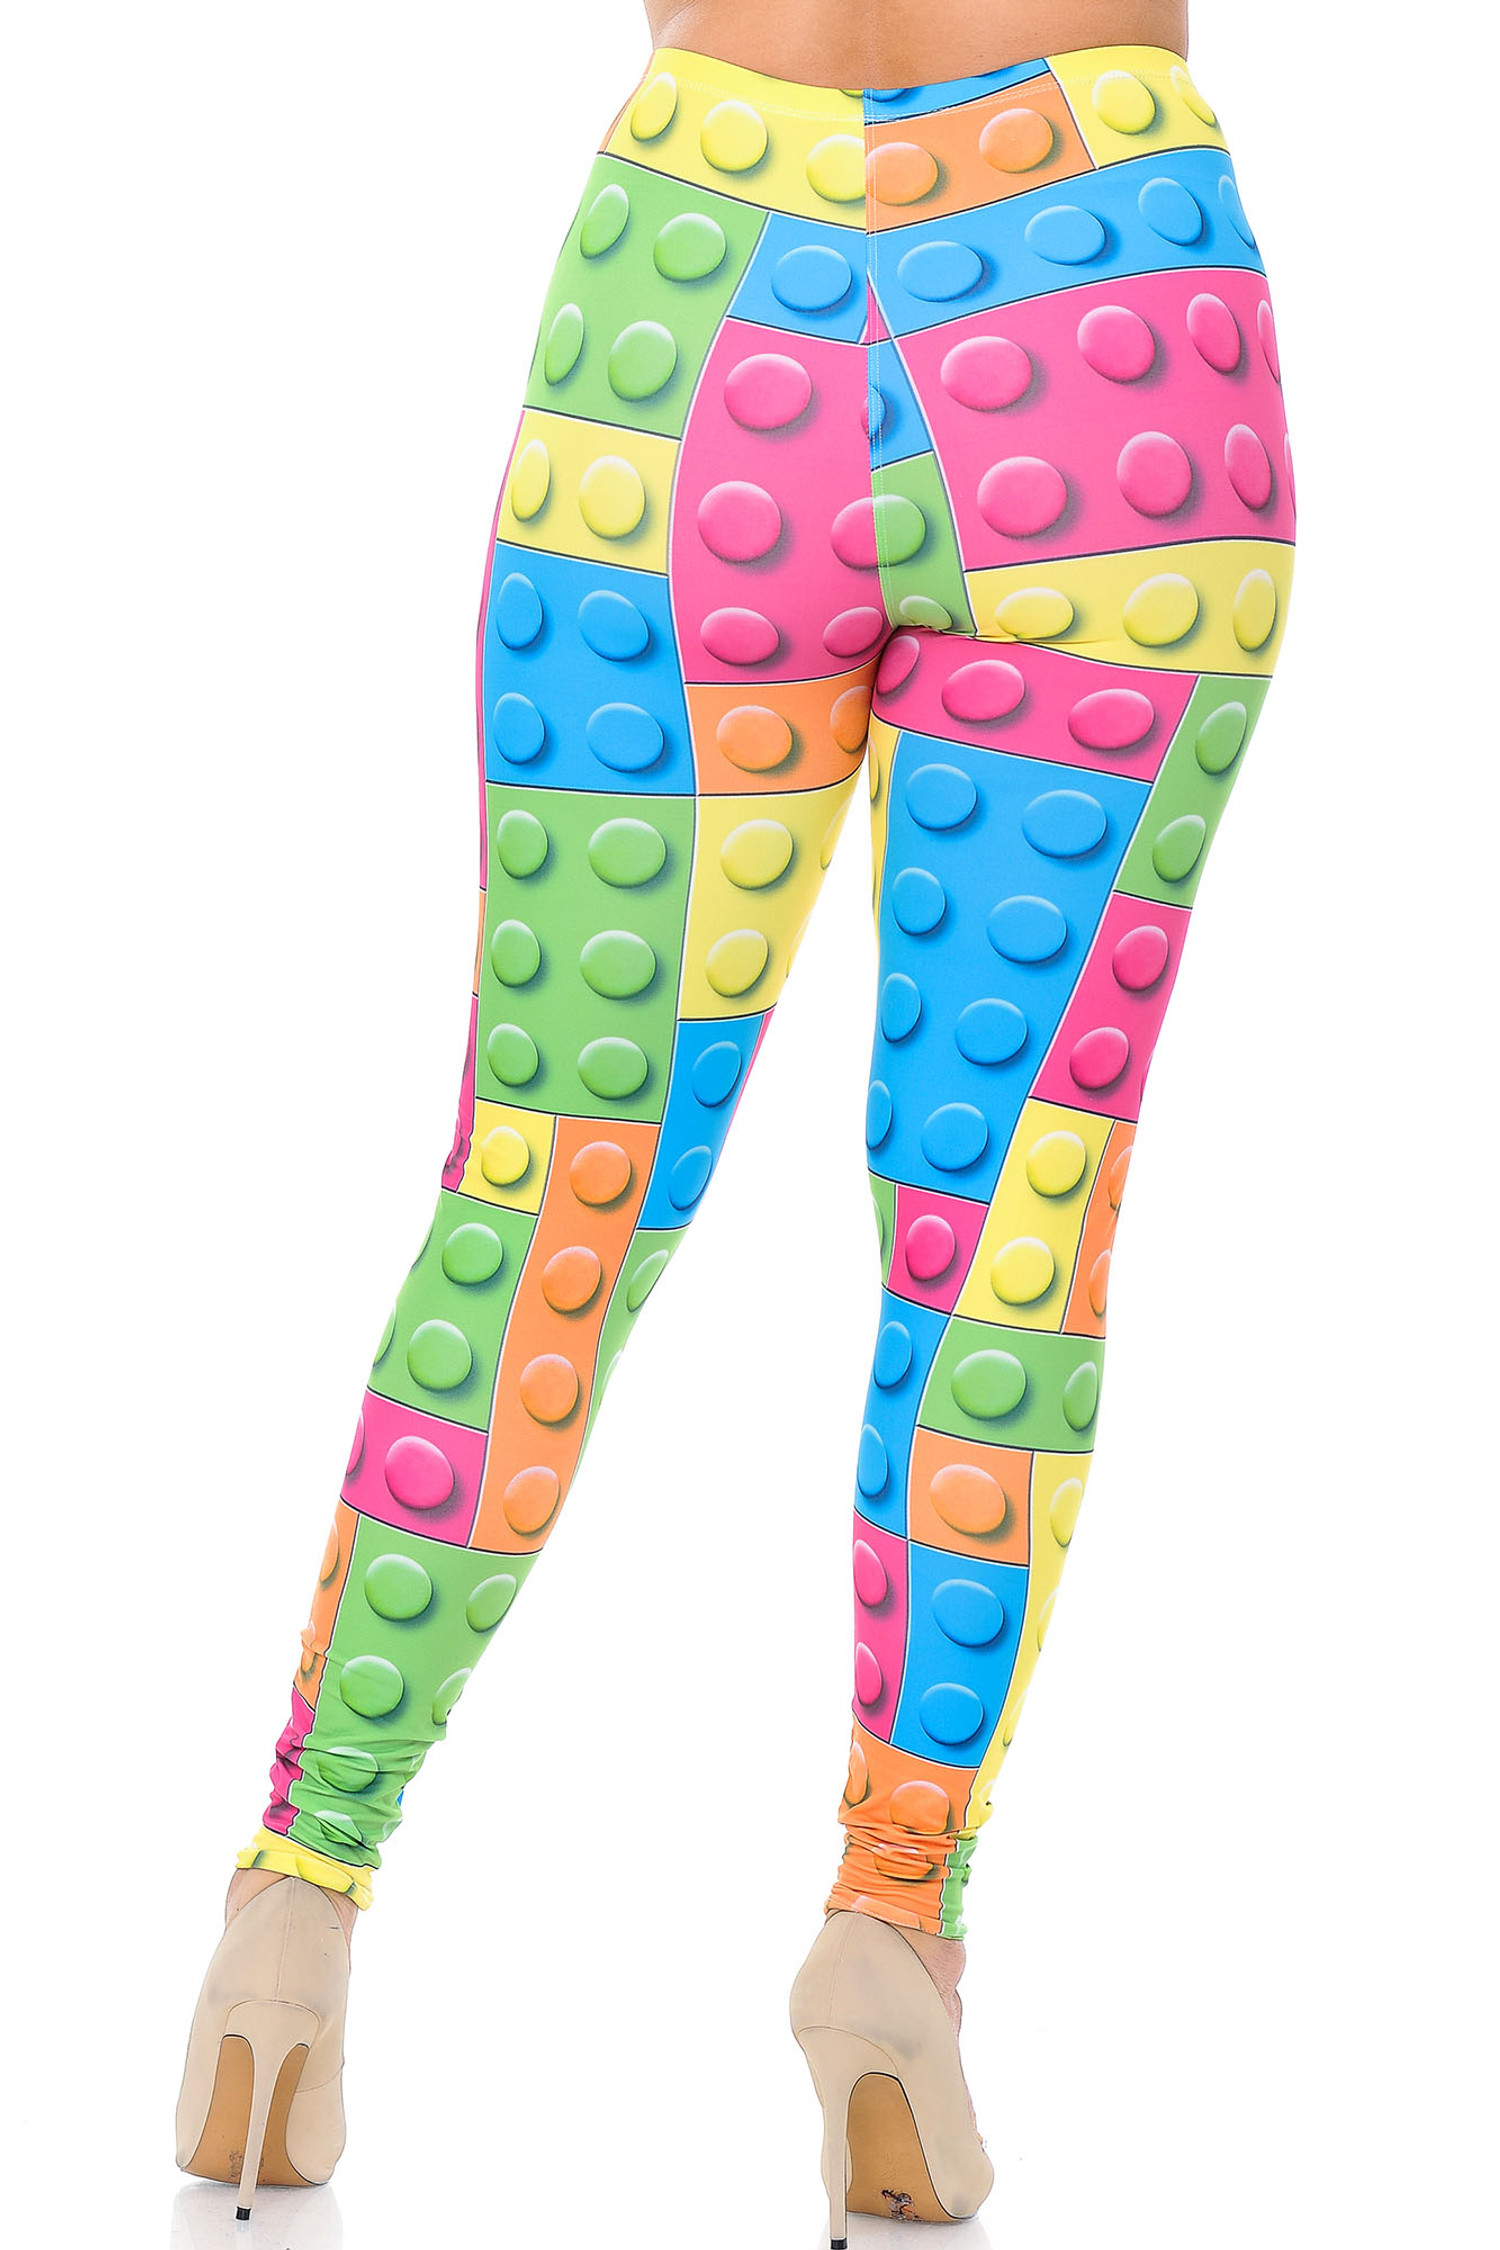 guiden elefant forord Creamy Soft Lego Extra Extra Plus Size Leggings - 3X-5X - USA Fashion™ |  USA Fashion